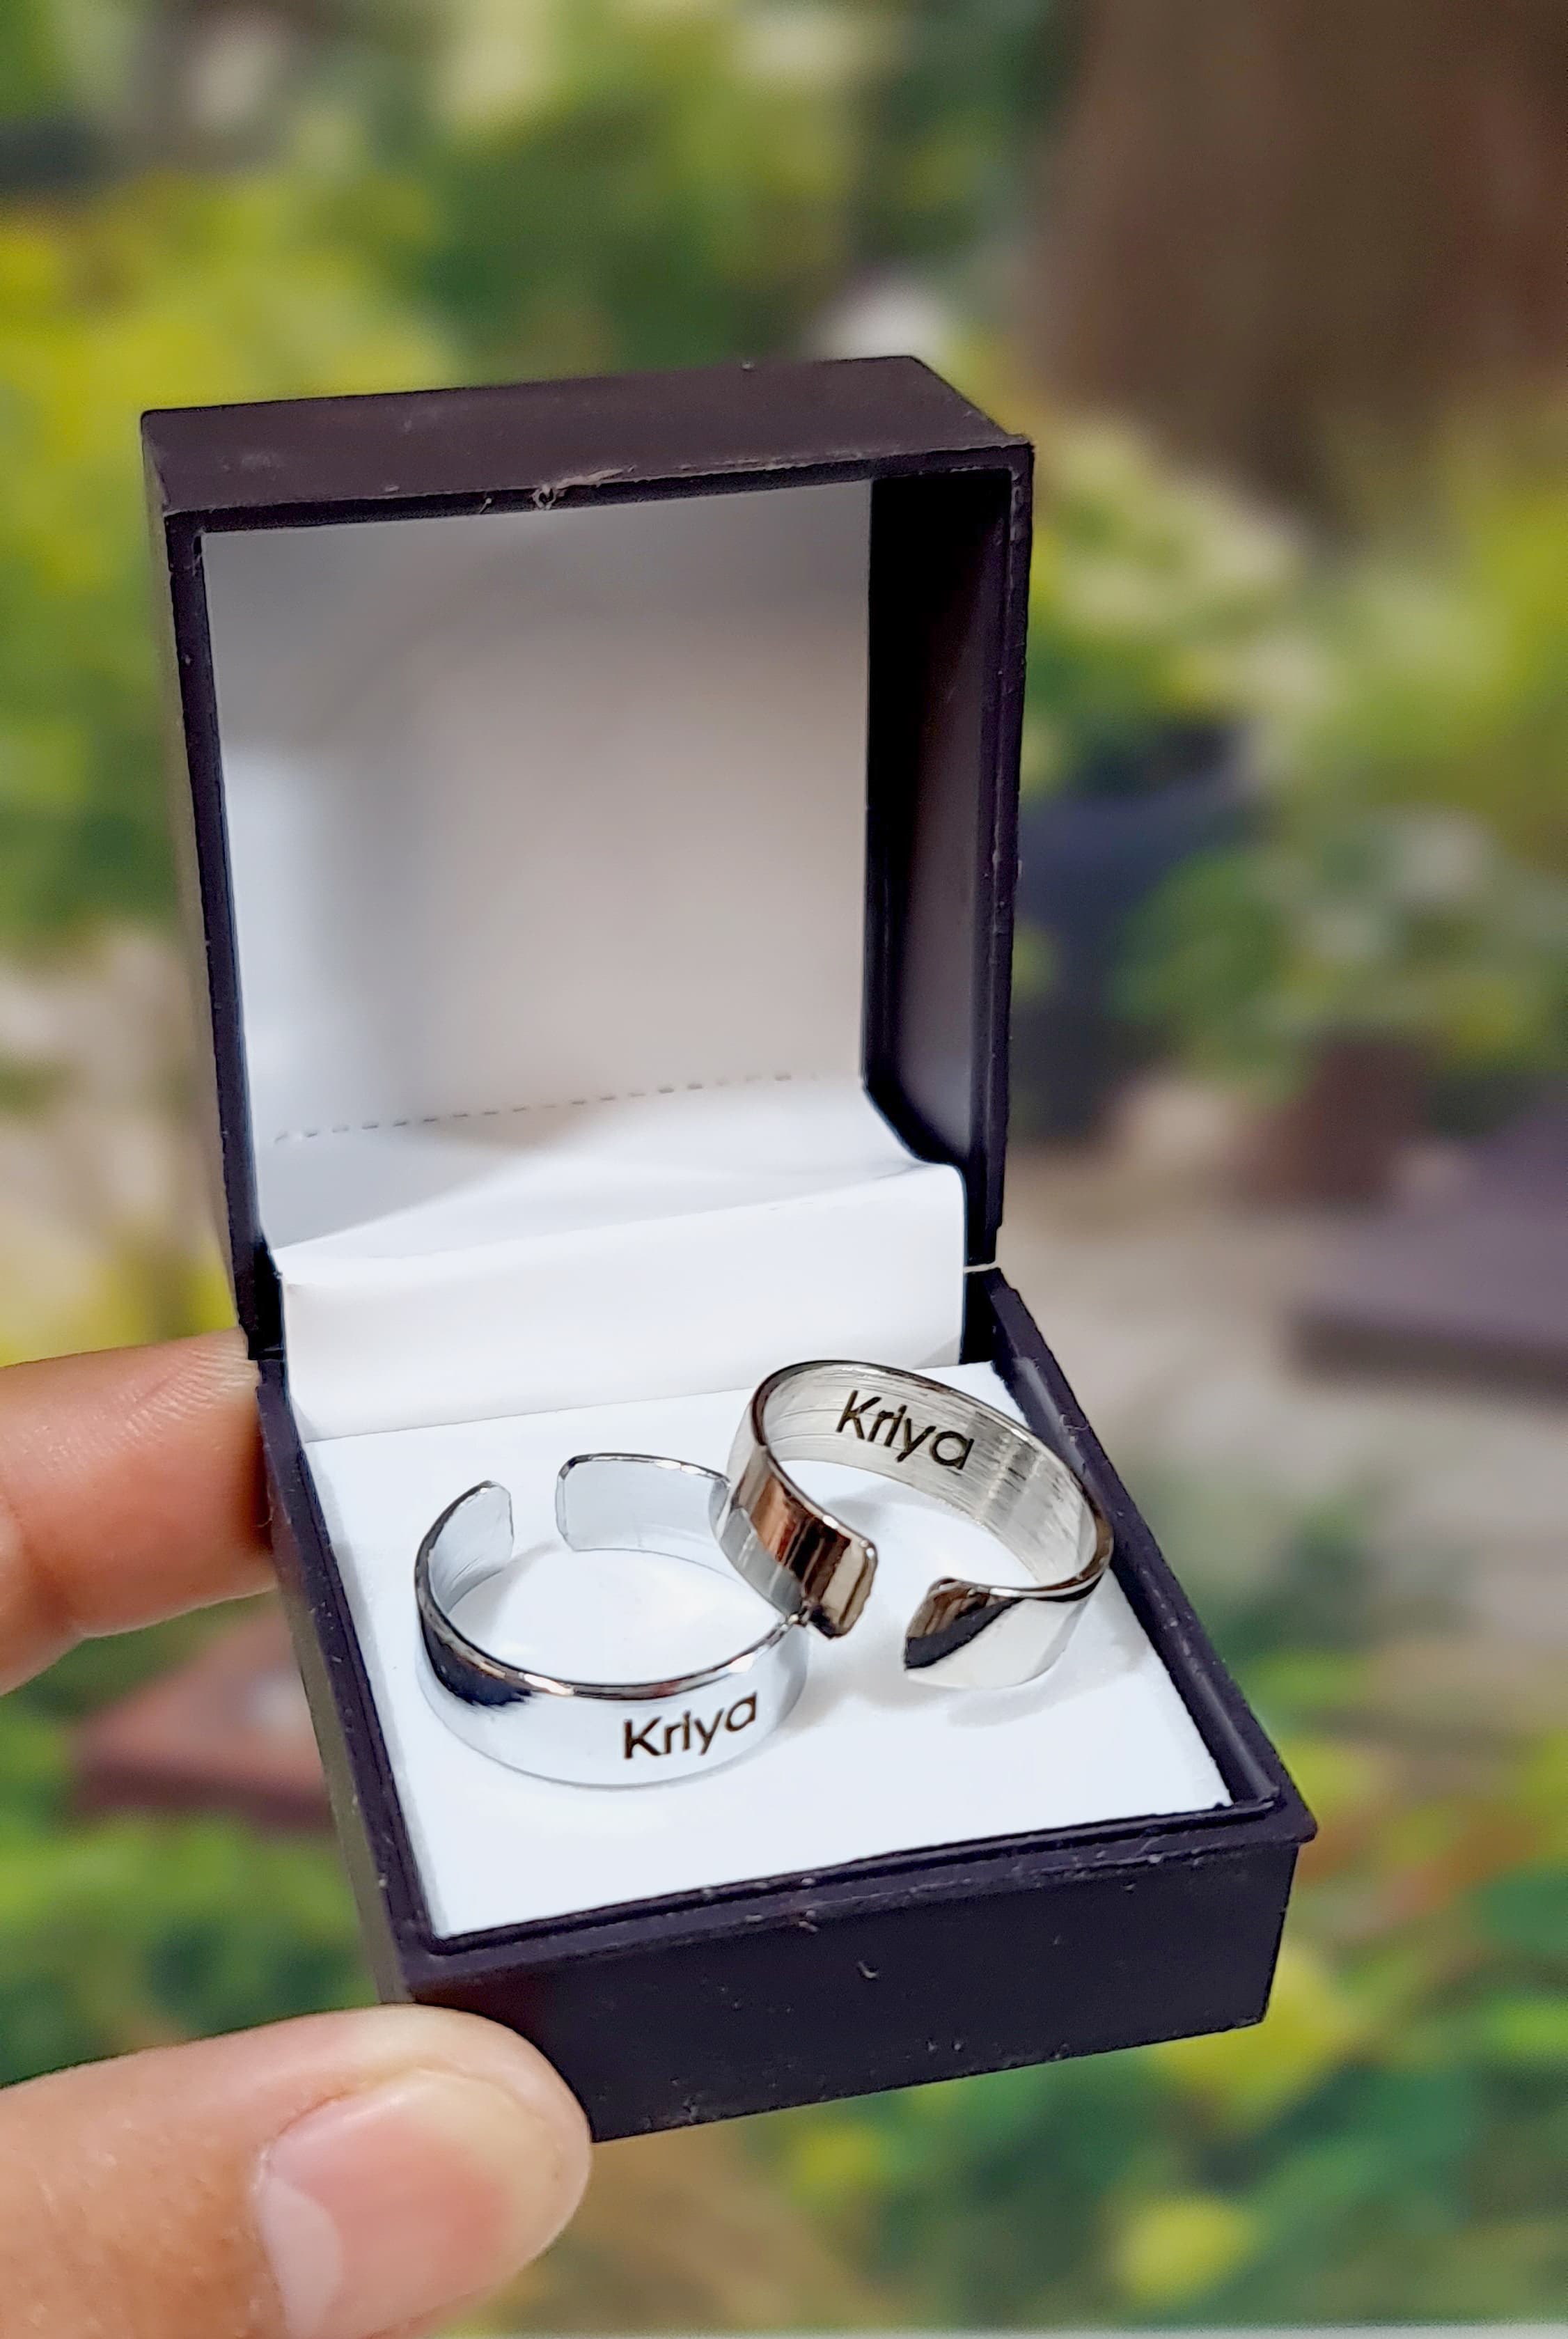 Gold Plated Couple Name Ring - Adjustable at Rs 799.00 | जेमस्टोन रिंग,  रत्न की अंगूठी - Blueswift, Malda | ID: 25195964455